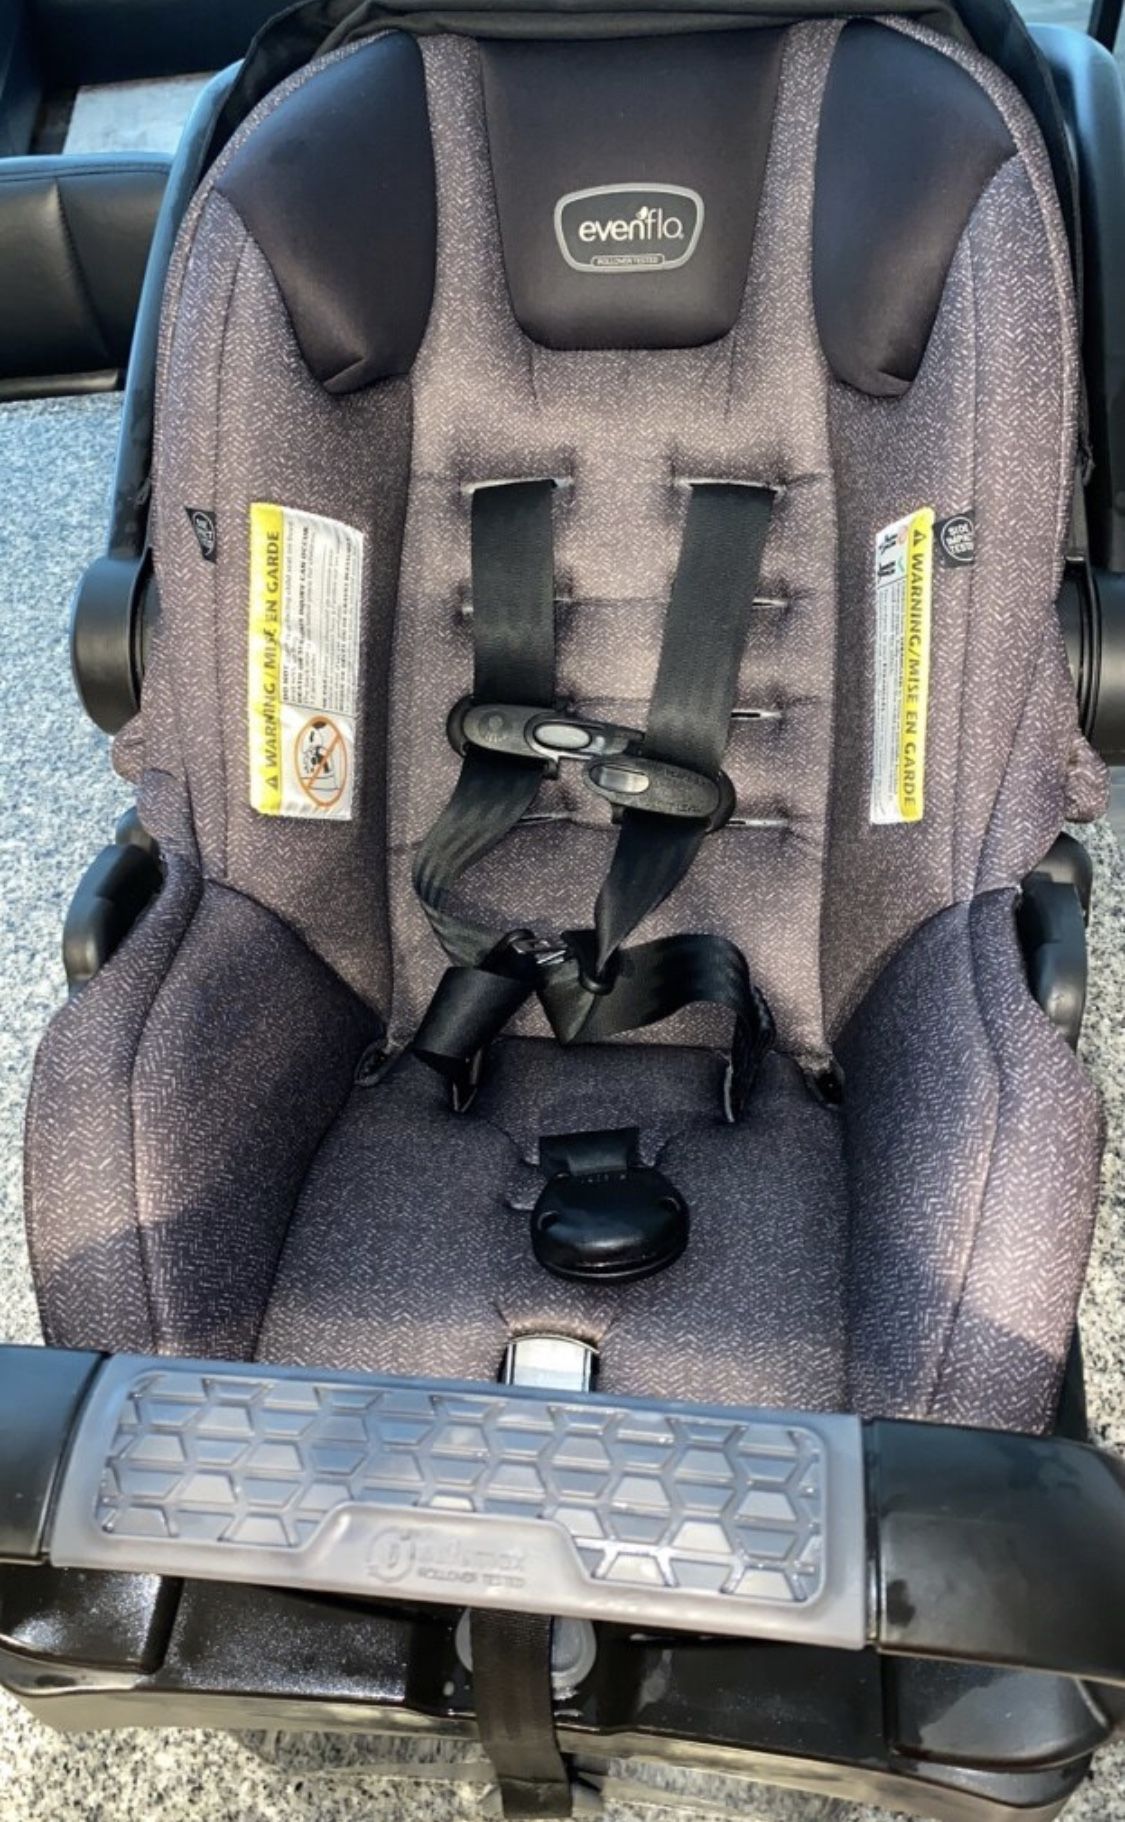 Evenflo car seat/base